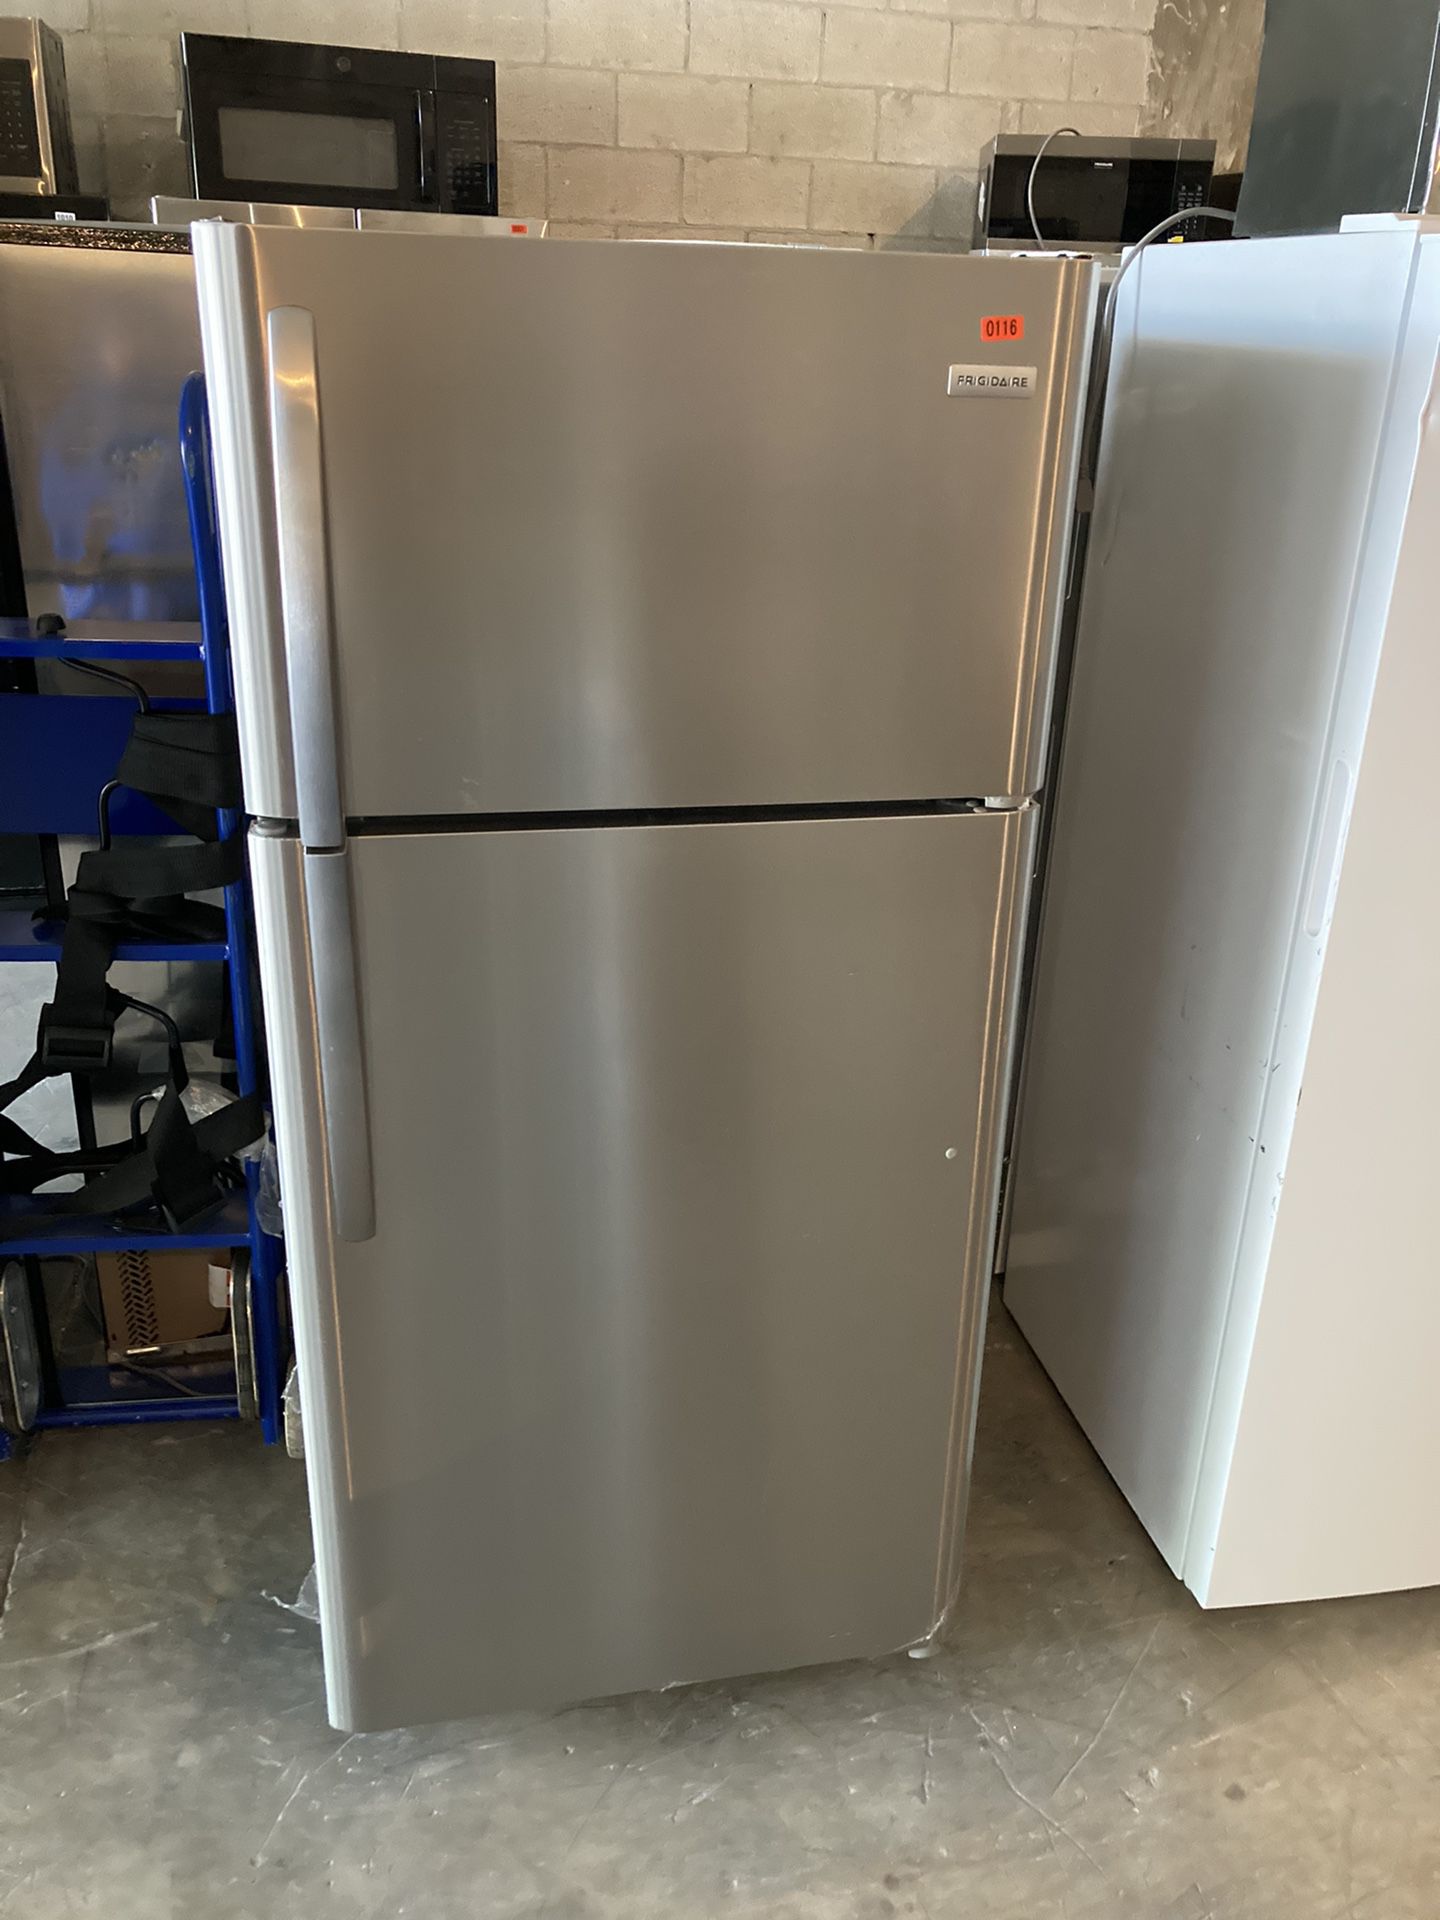 Frigidaire 30” Top Freezer Refrigerator Stainless Steel $600